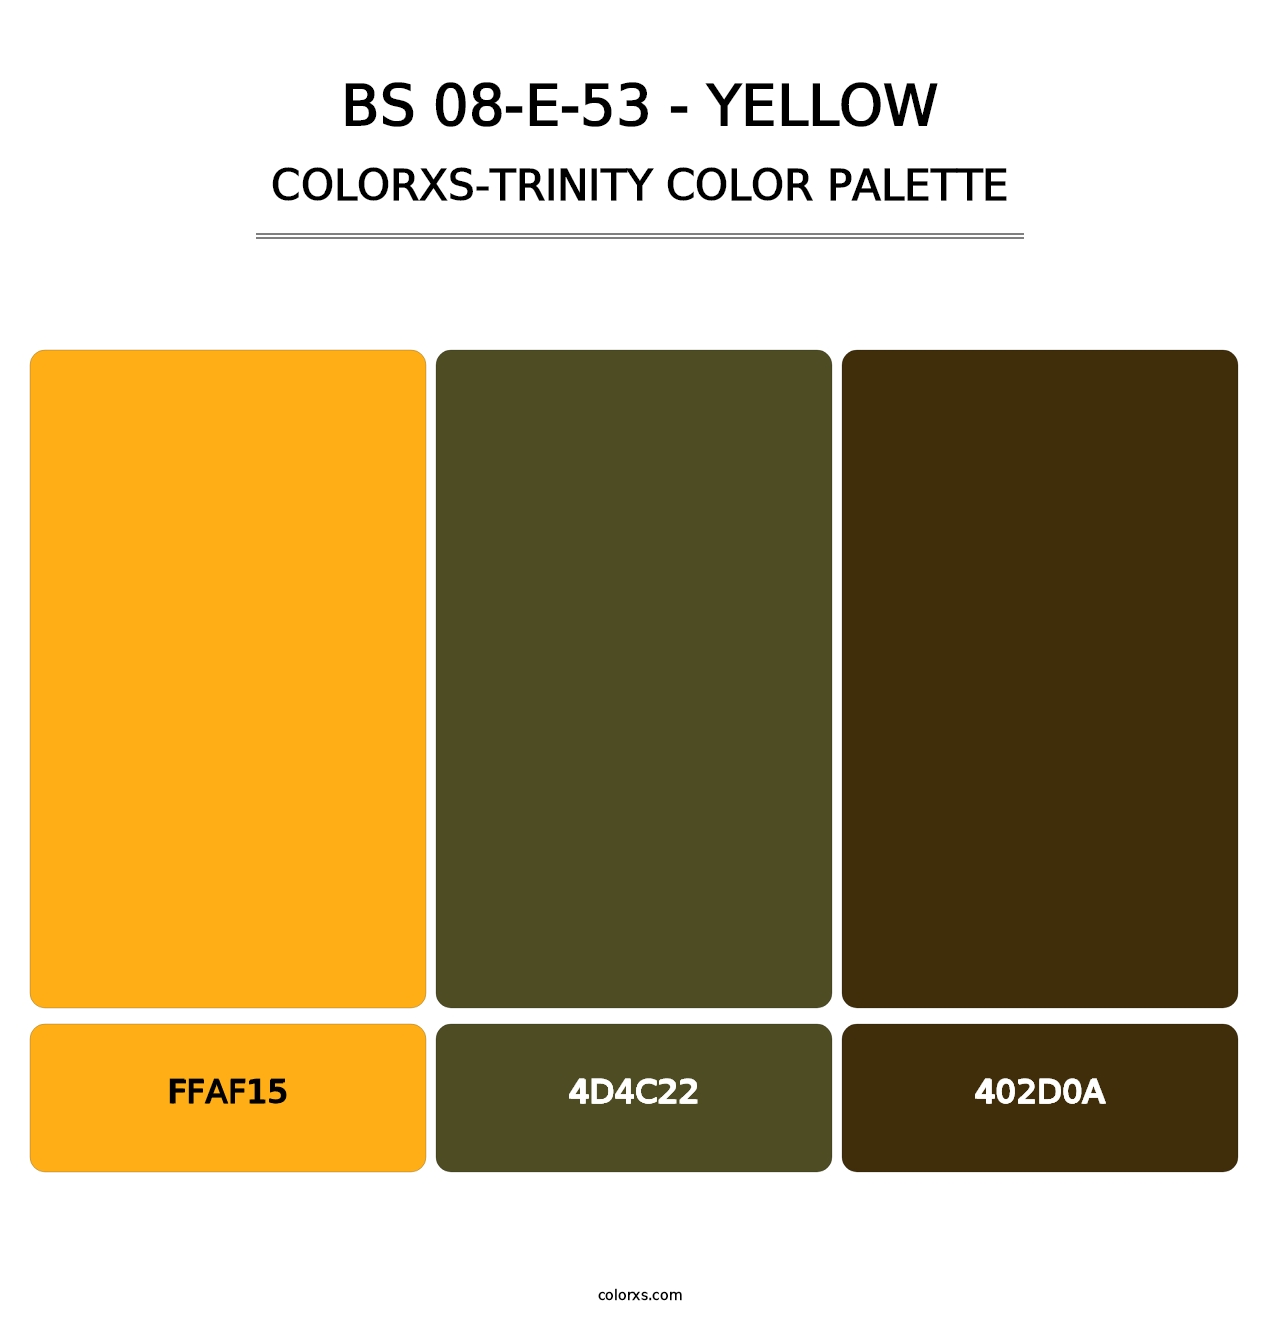 BS 08-E-53 - Yellow - Colorxs Trinity Palette